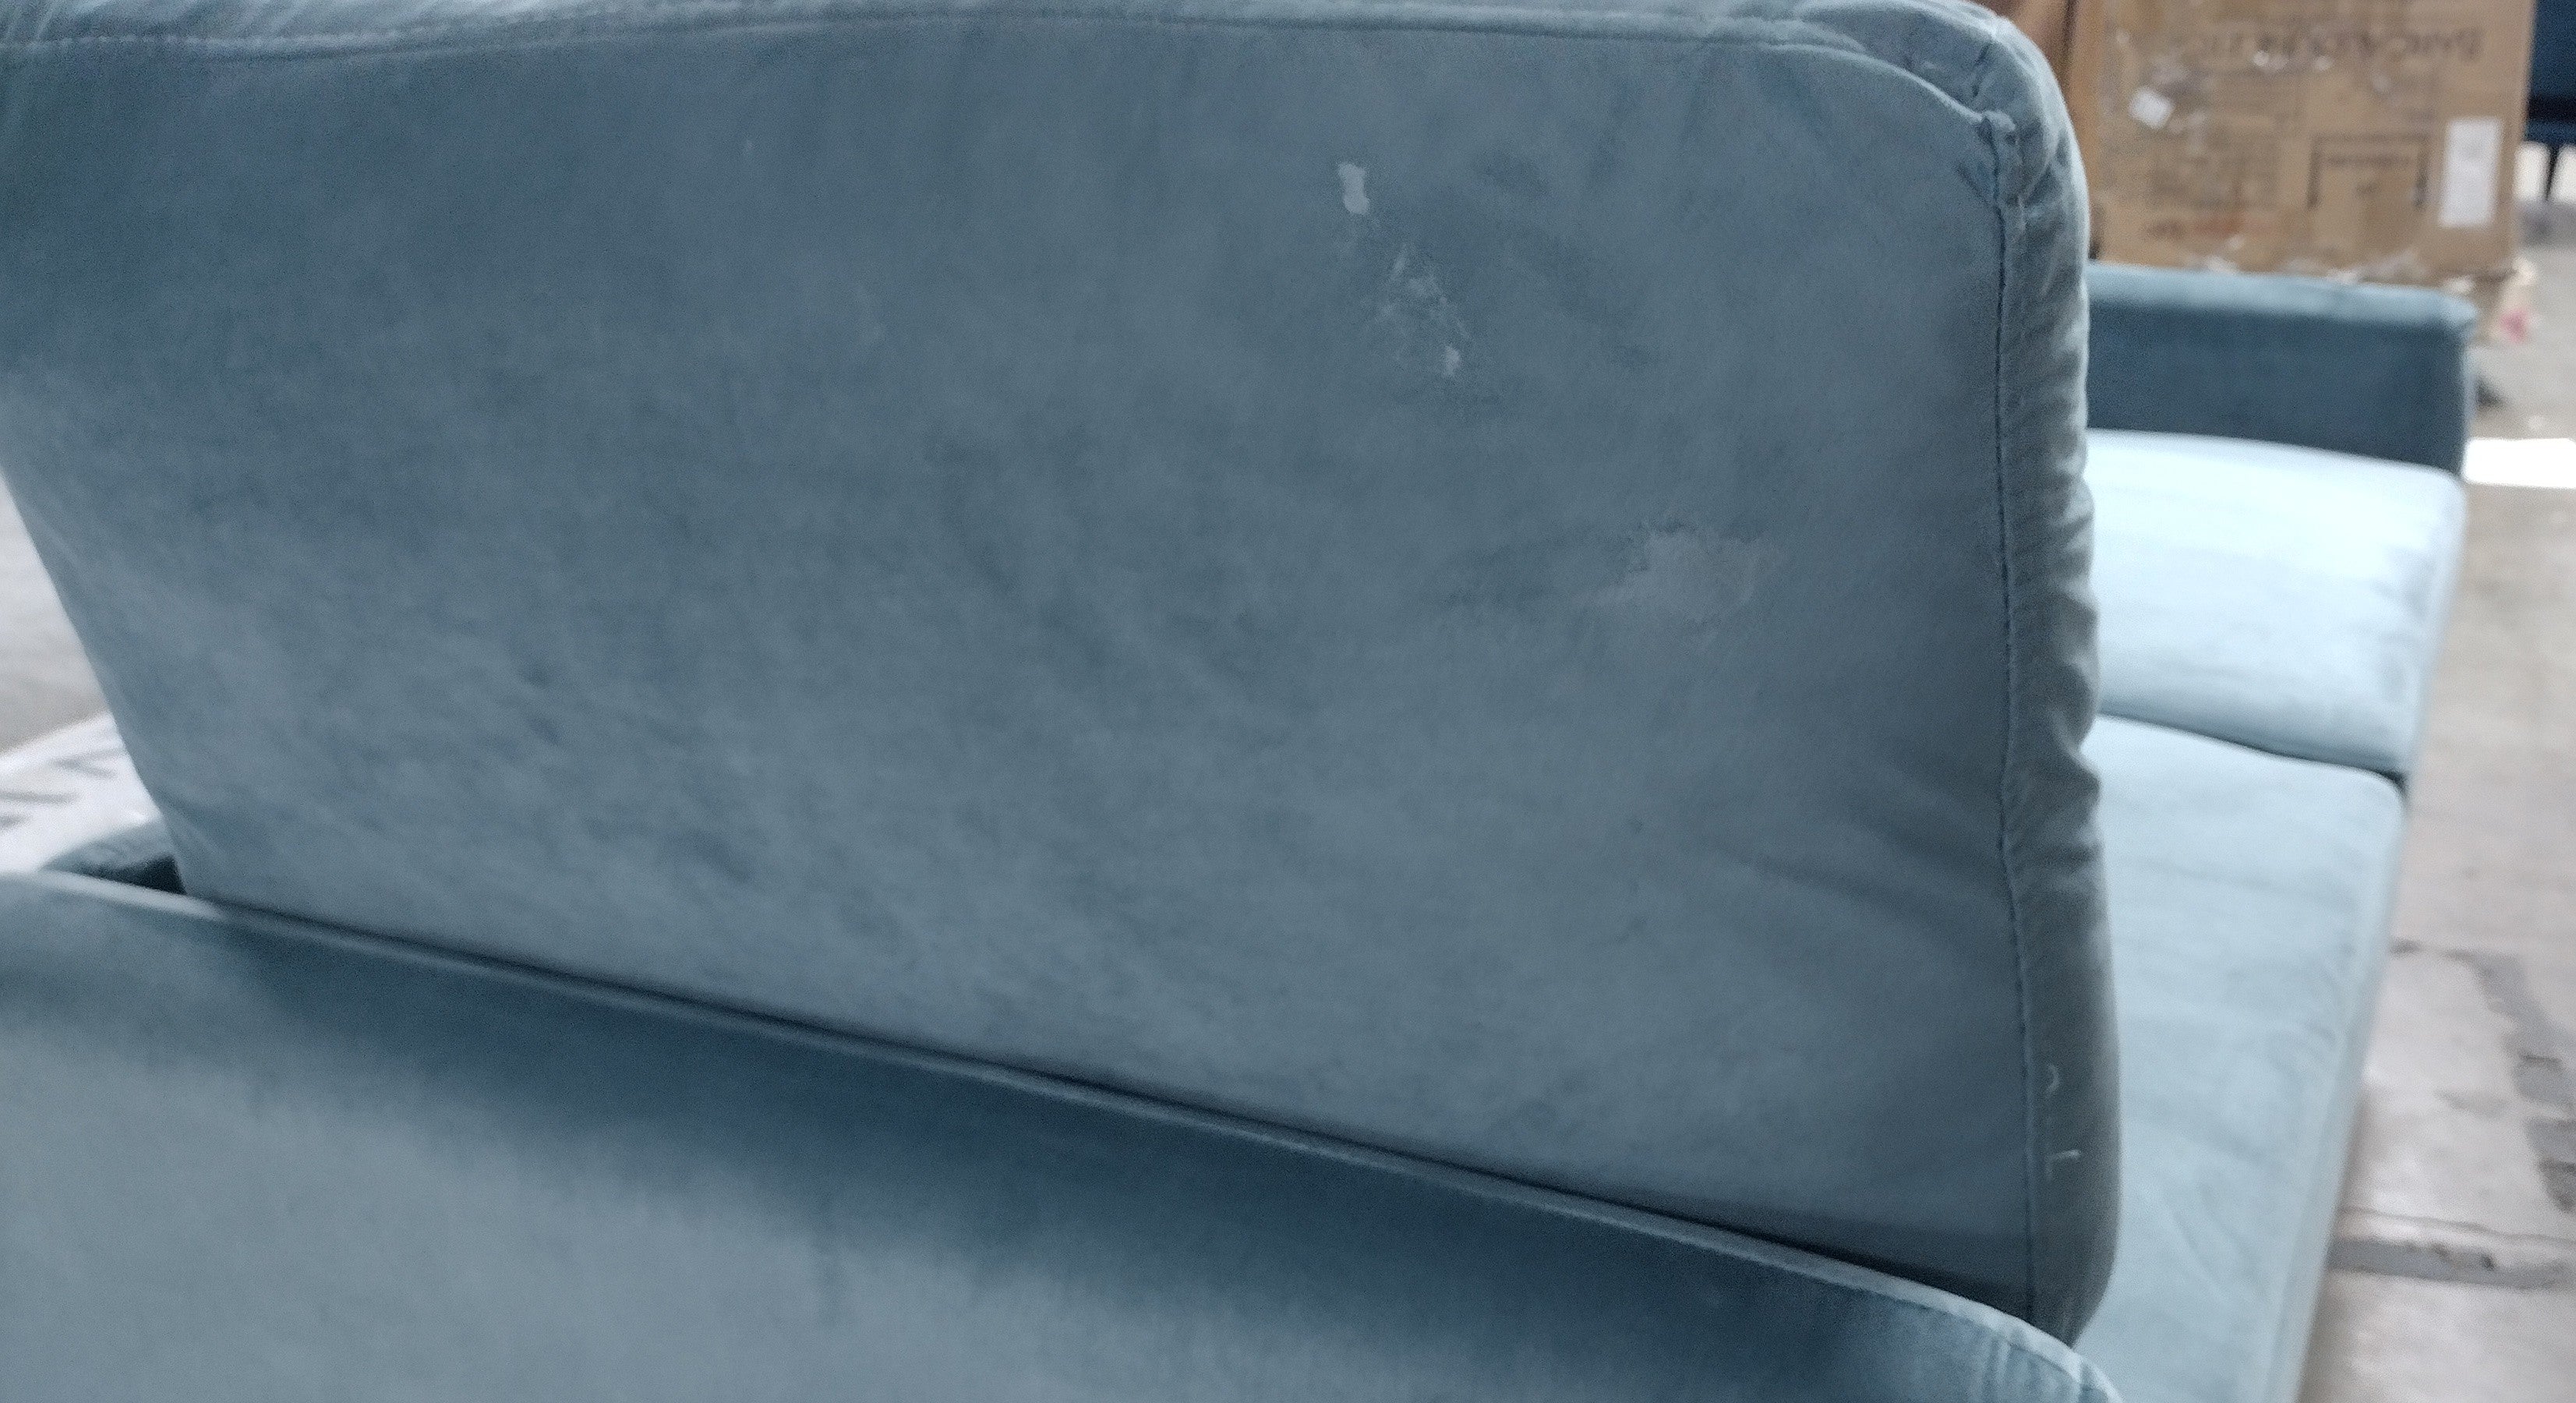 Bonrcea Modern Sofa Tufted Couch Love Seats, Teal